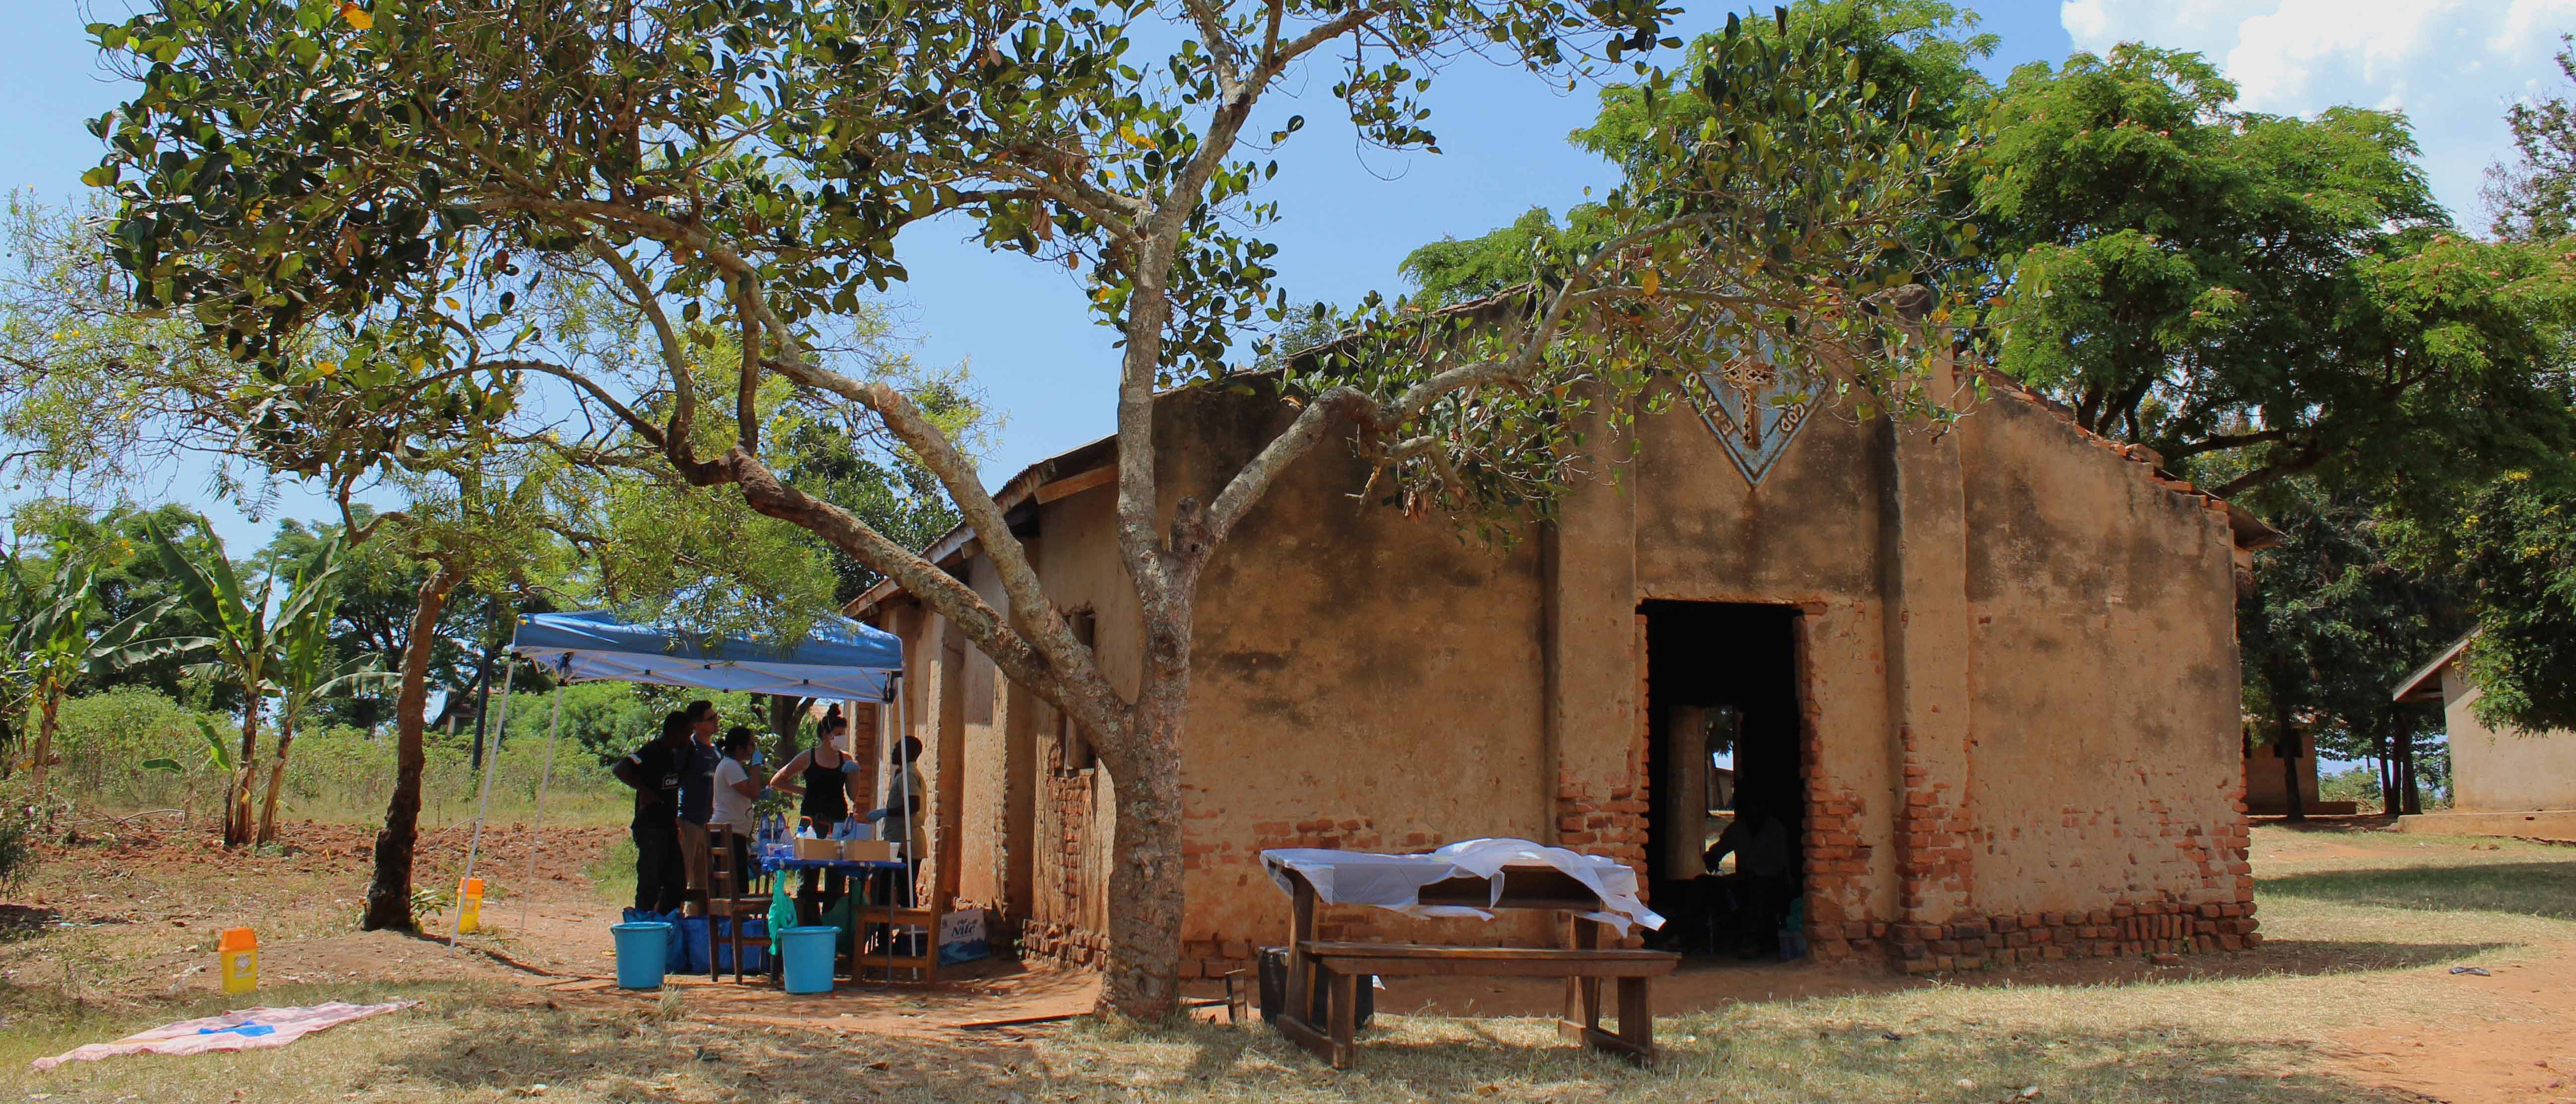 Sampling station set up under a tree beside an abandoned church in rural Uganda